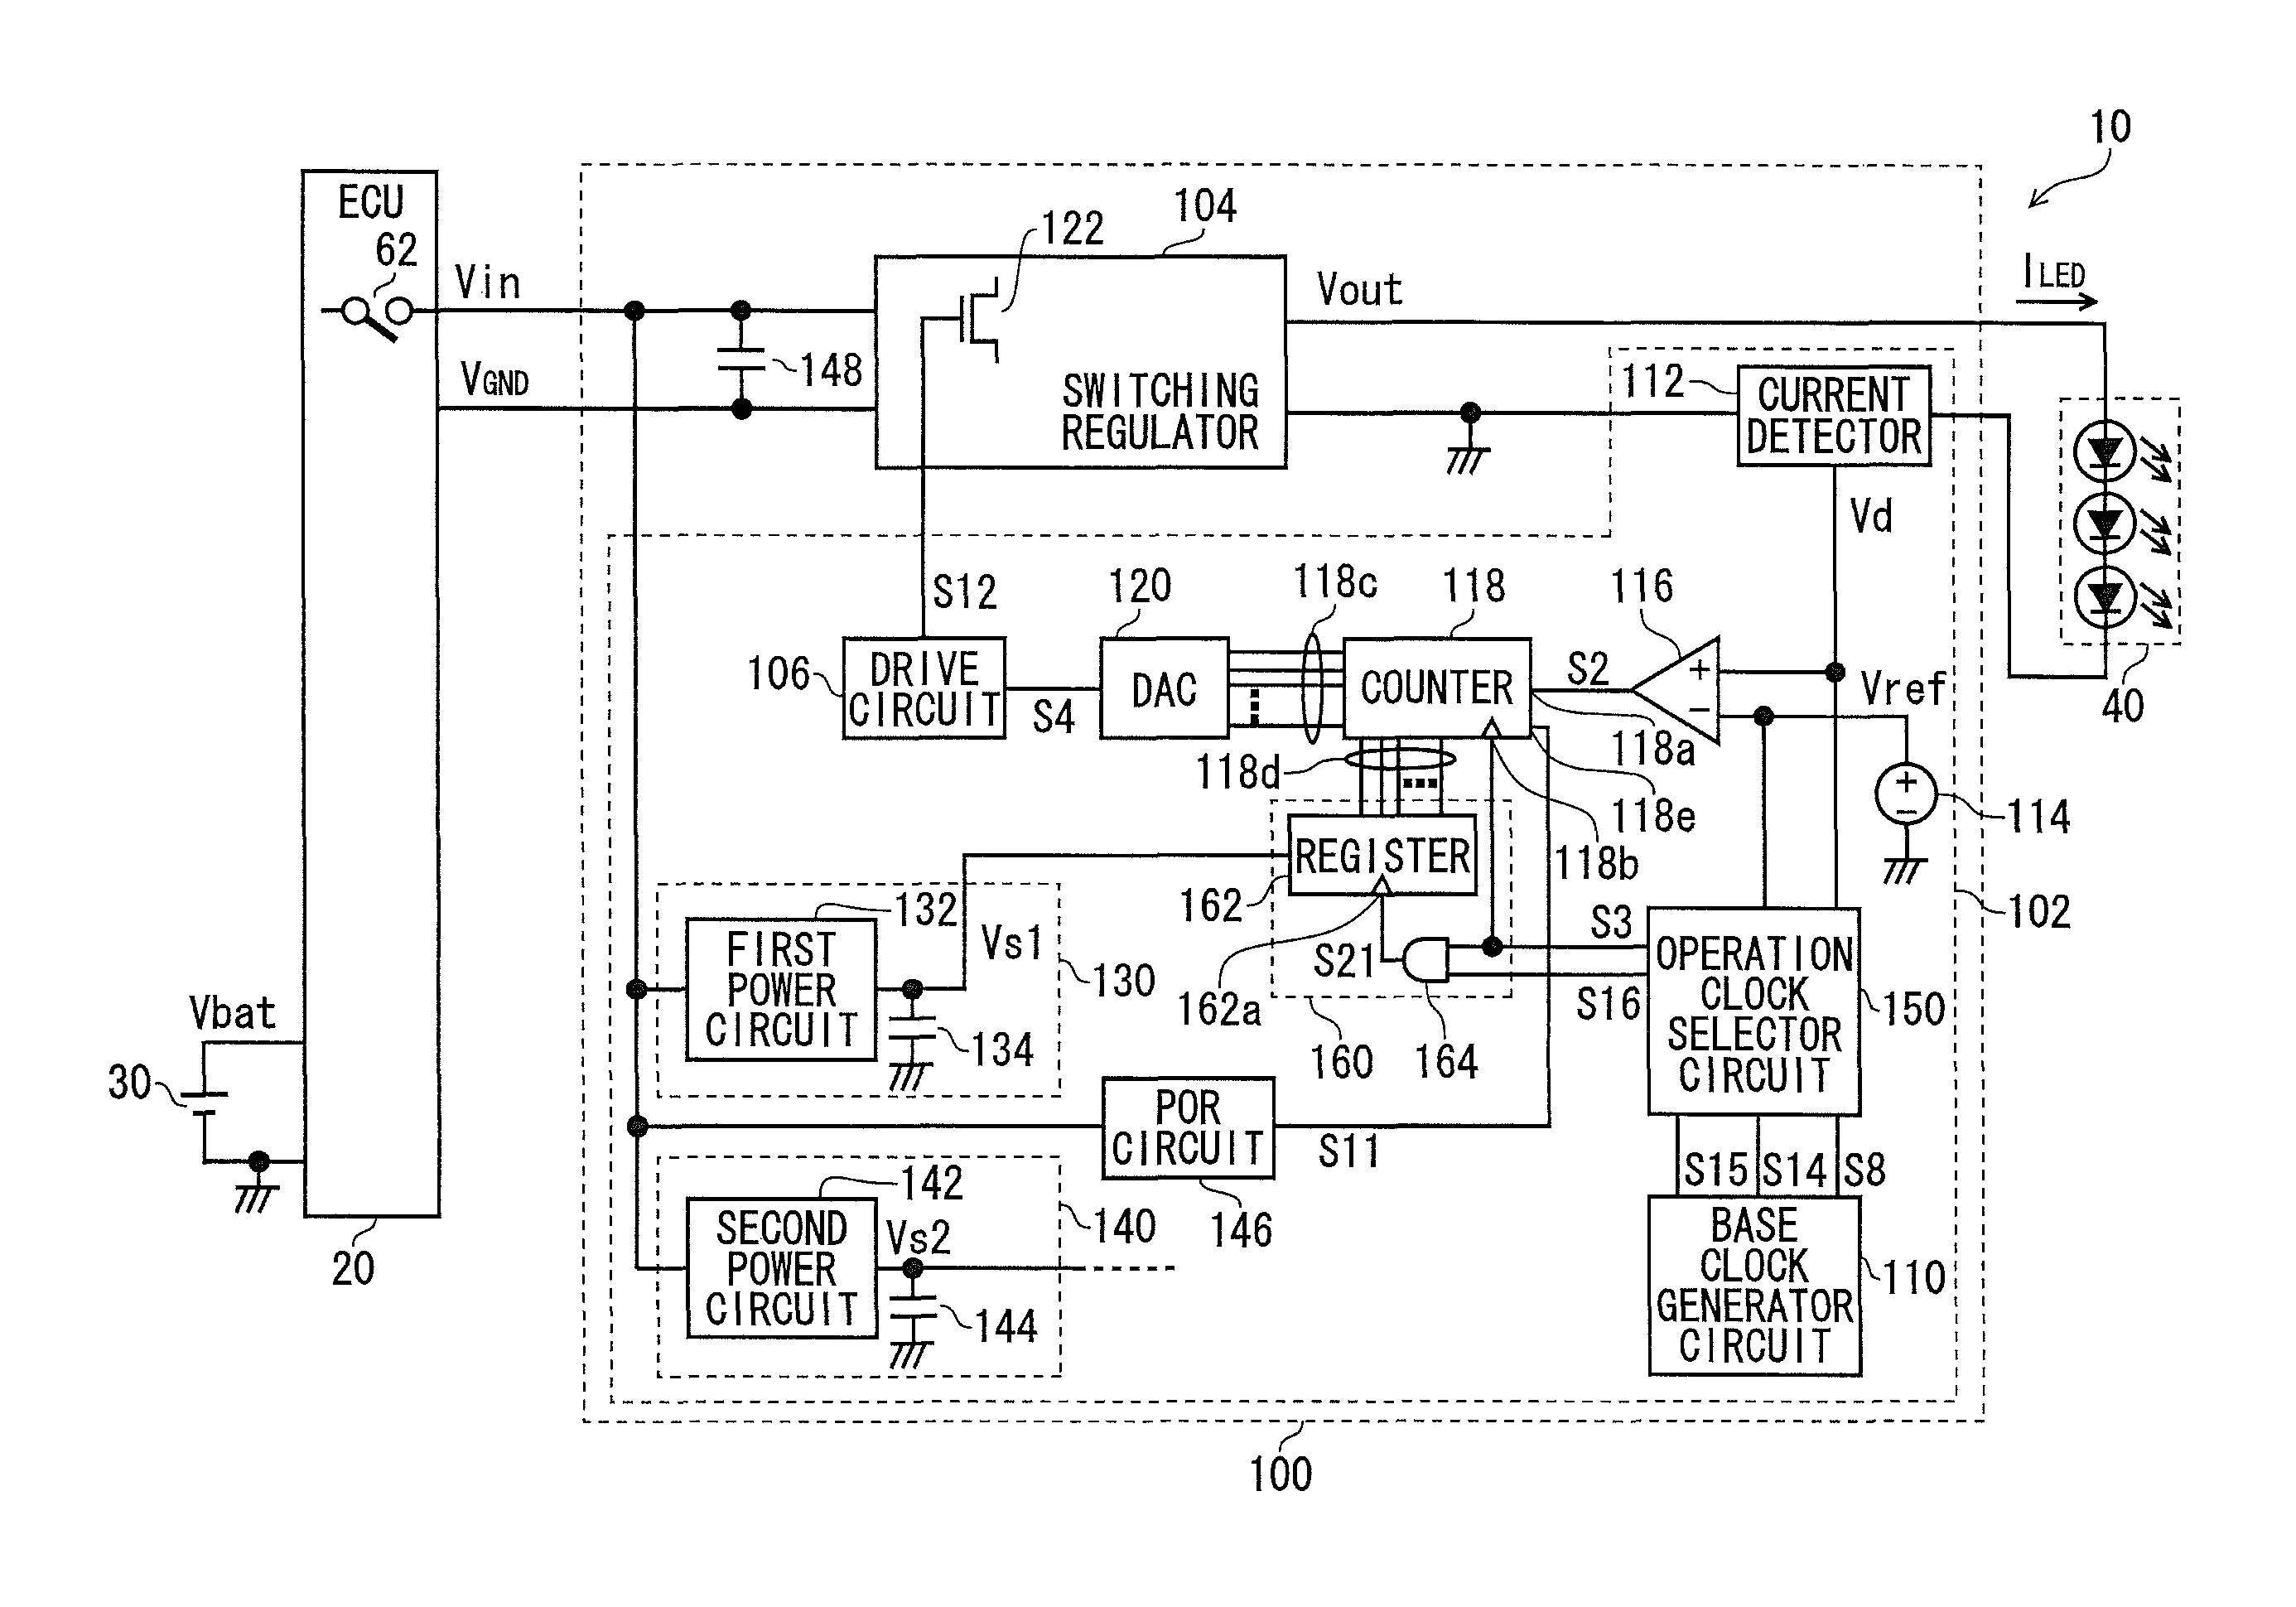 Semiconductor light source lighting circuit